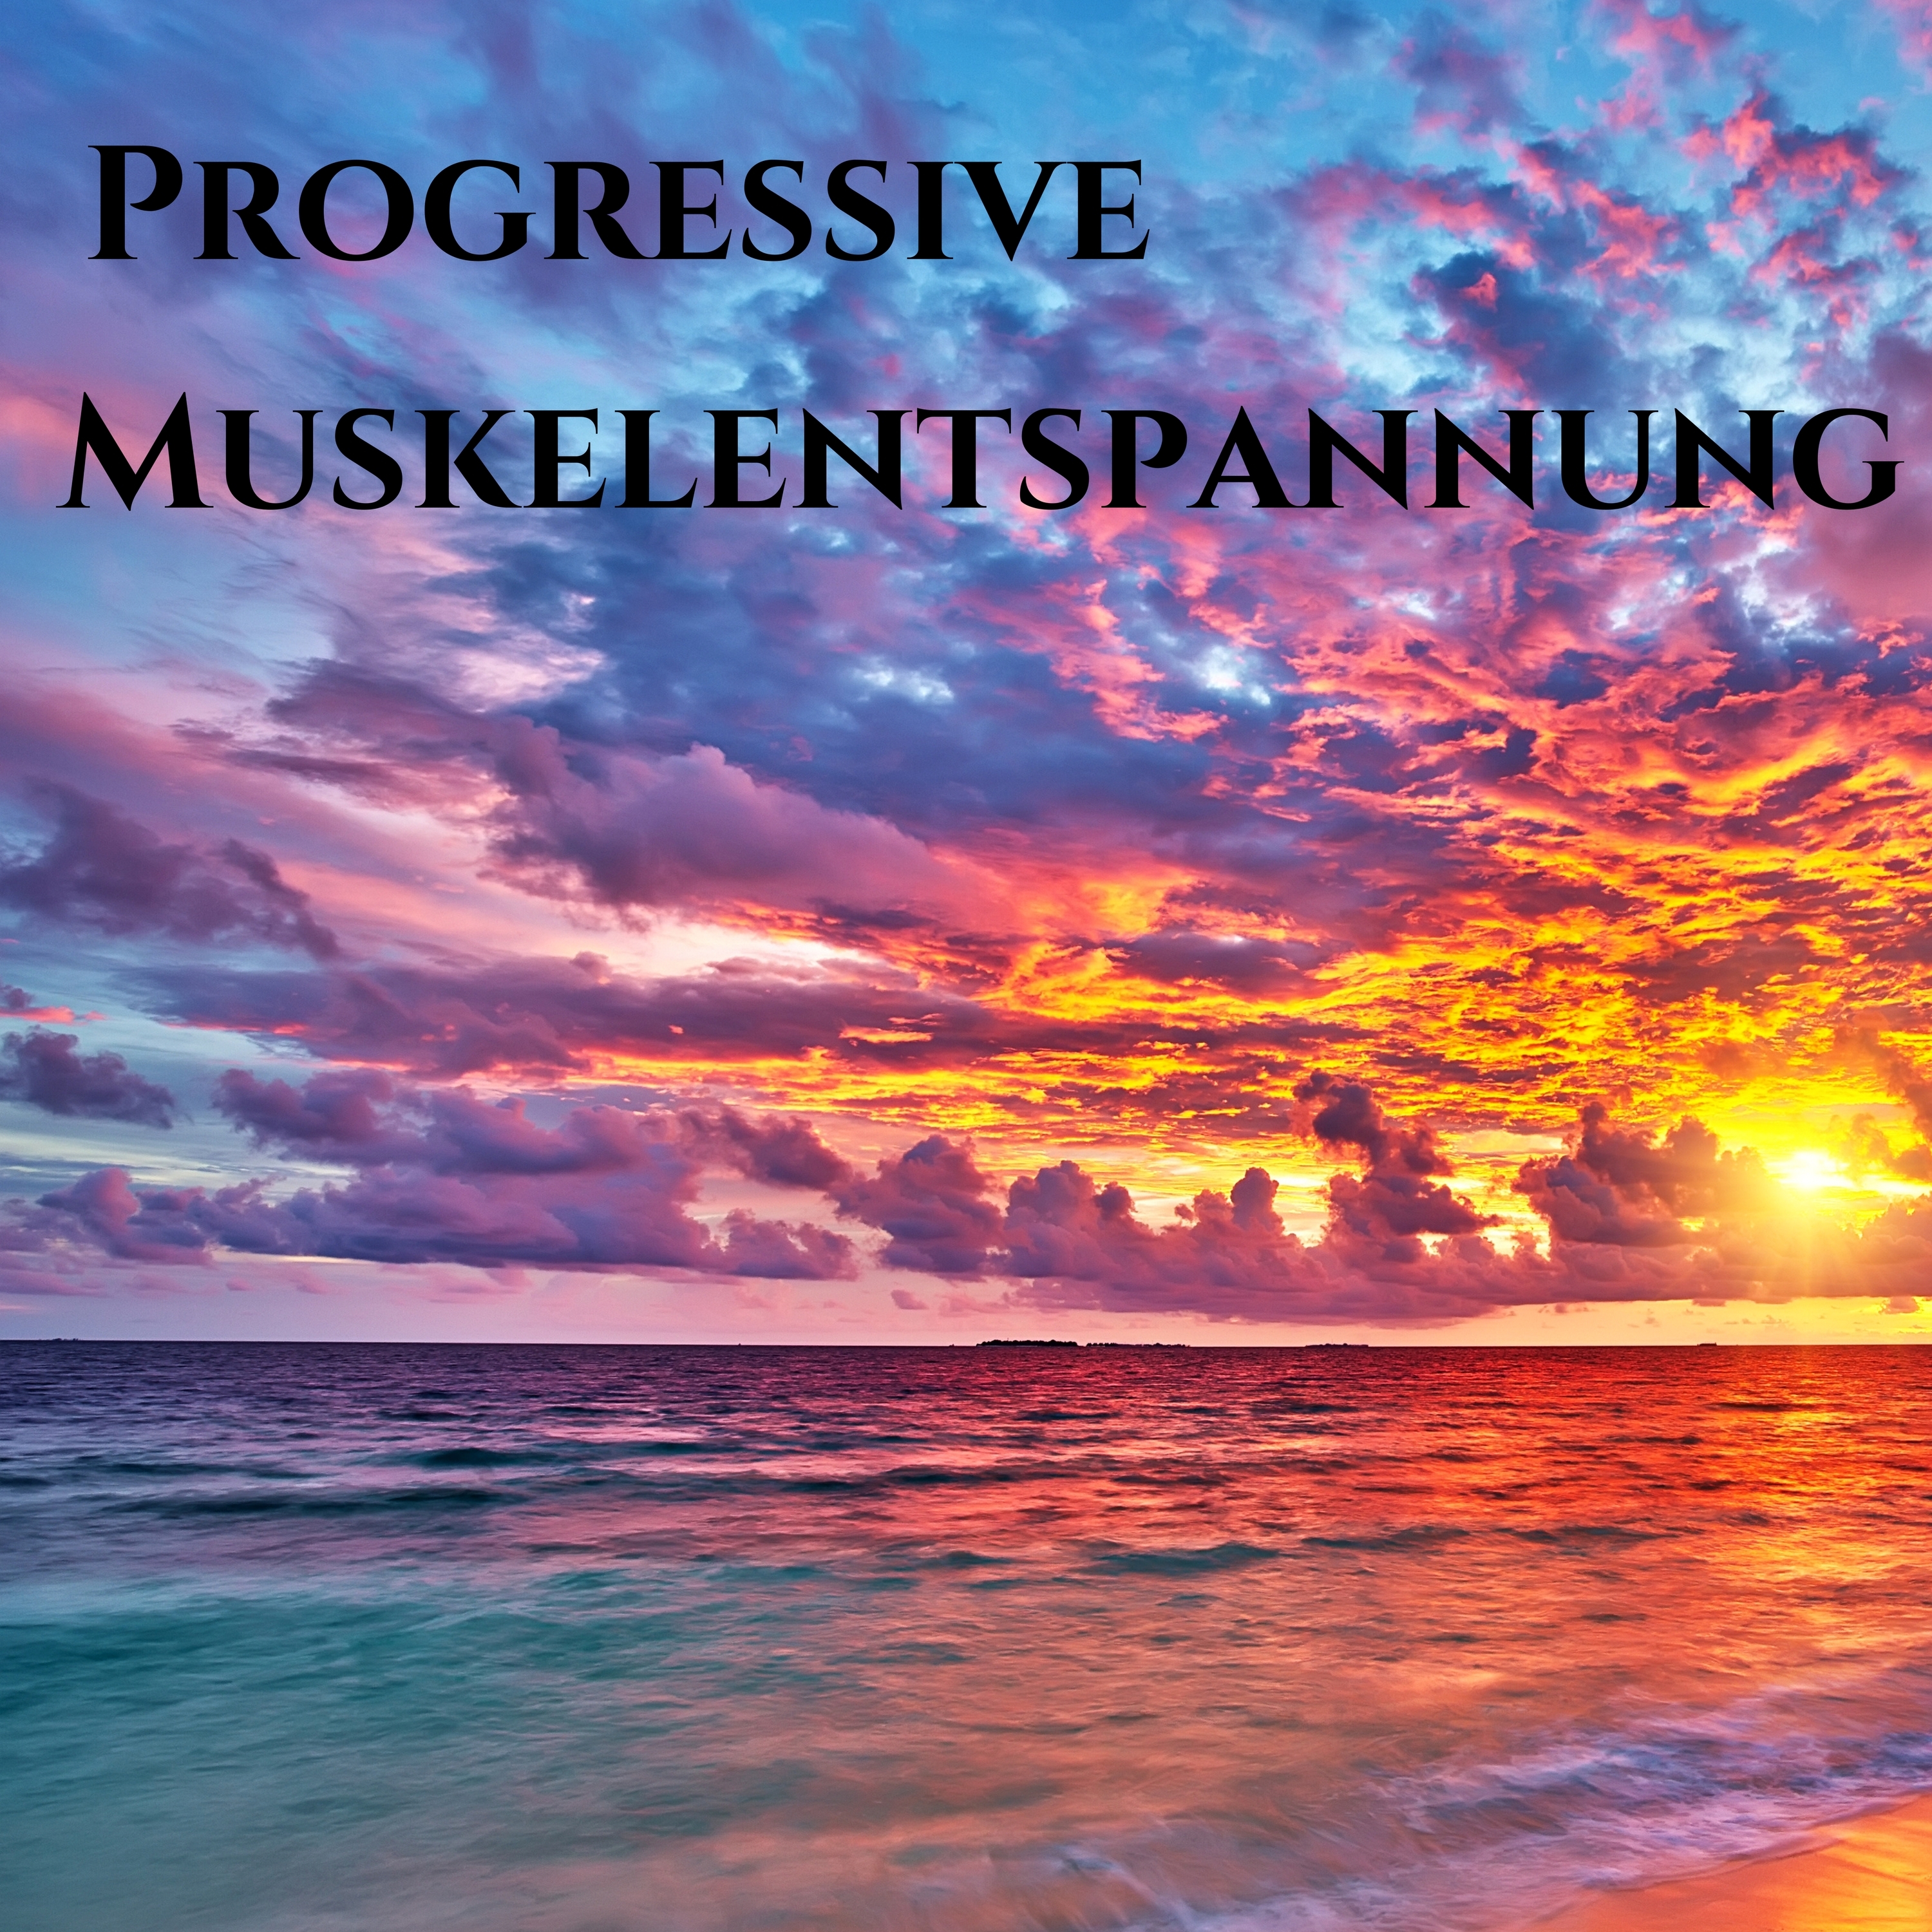 Progressive Muskelentspannung - Entspannungsmusik Sanft, Tag erwacht, Meditationsmusik